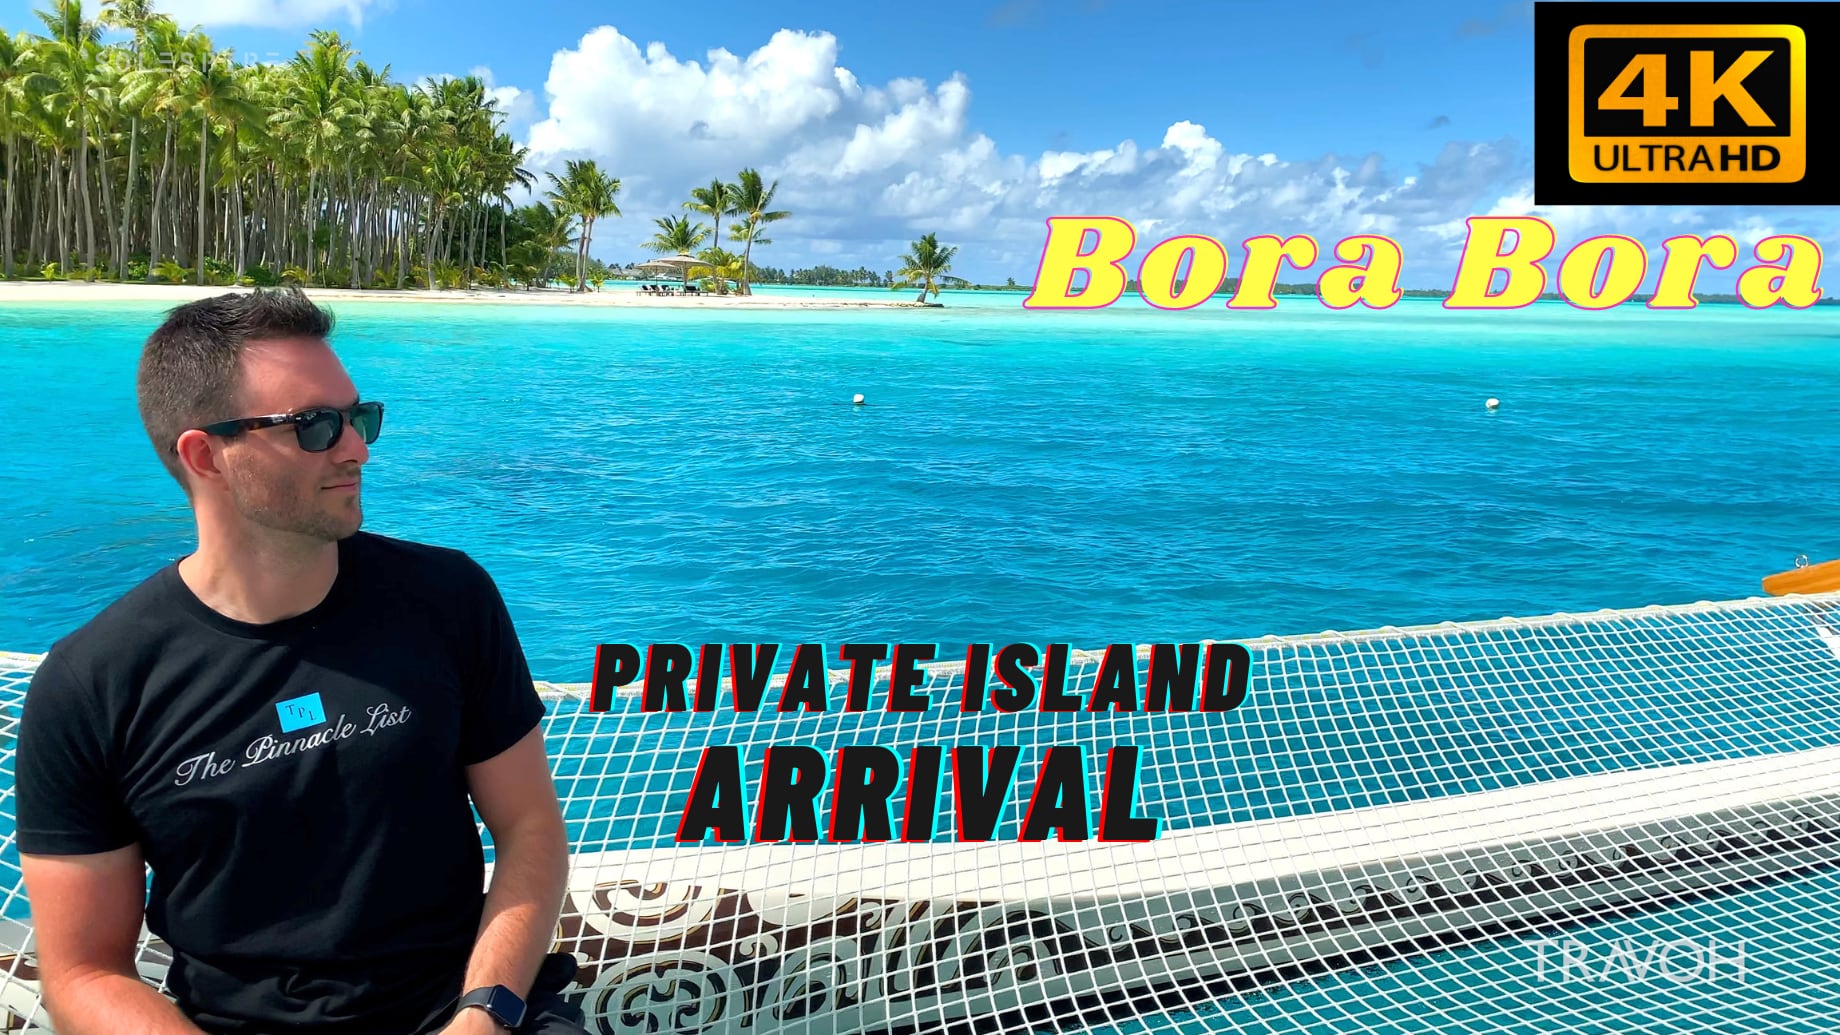 Arriving At Motu Tane - Private Island Views - Bora Bora, French Polynesia - 4K Ultra HD Travel